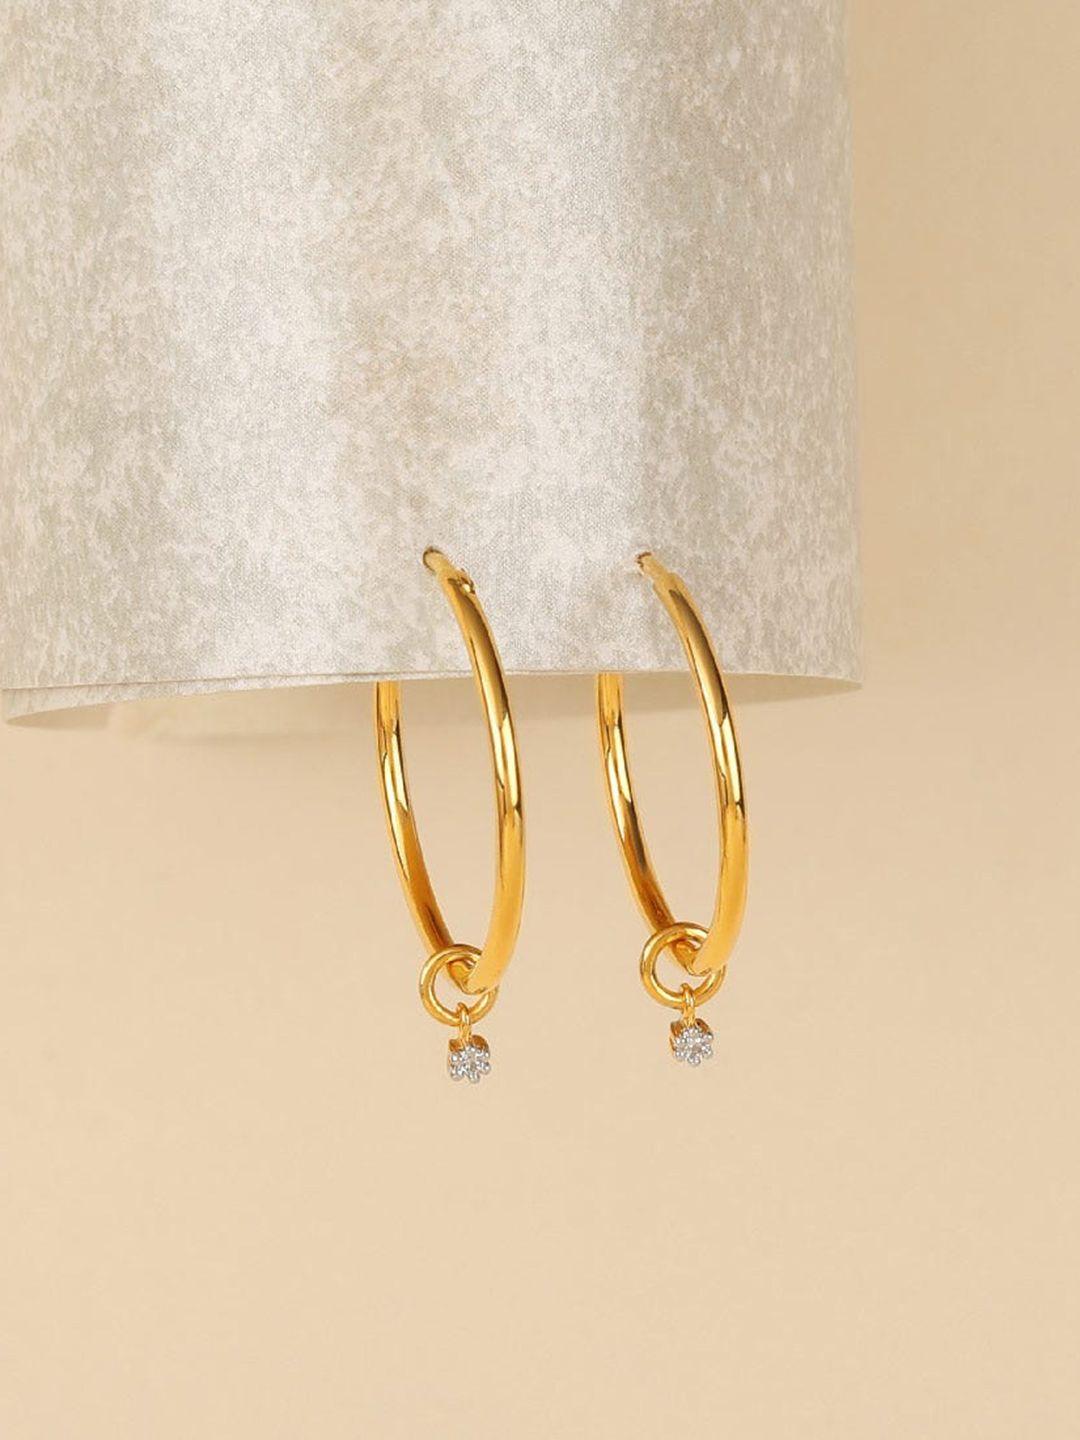 candere a kalyan jewellers company 18kt bis hallmark gold diamond-studded earrings-2.0gm